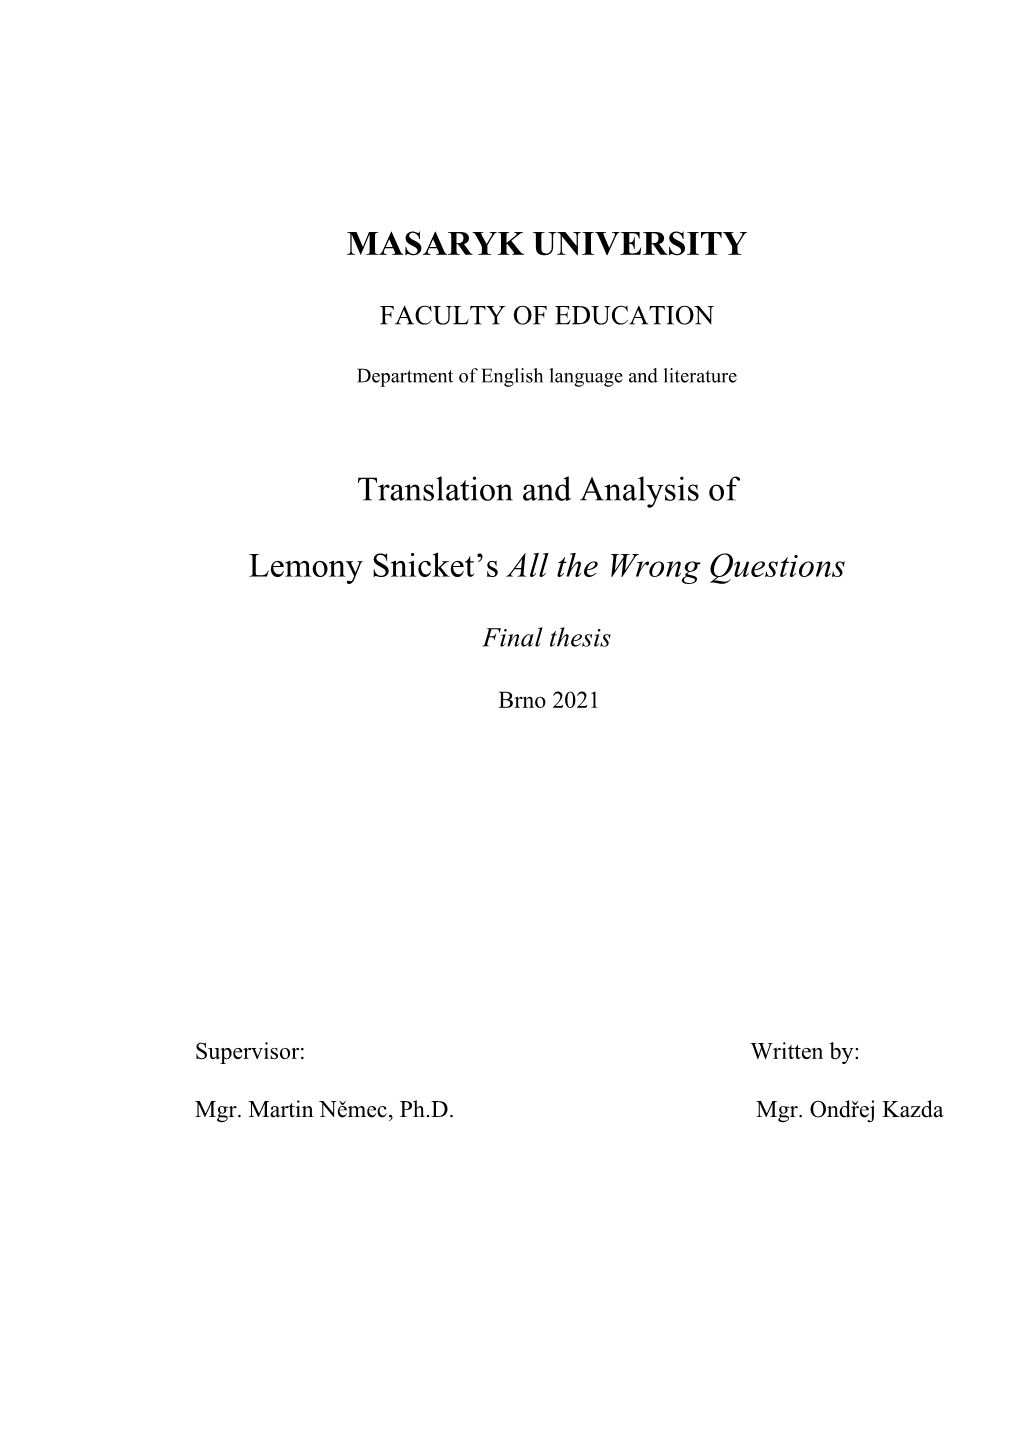 MASARYK UNIVERSITY Translation and Analysis of Lemony Snicket's